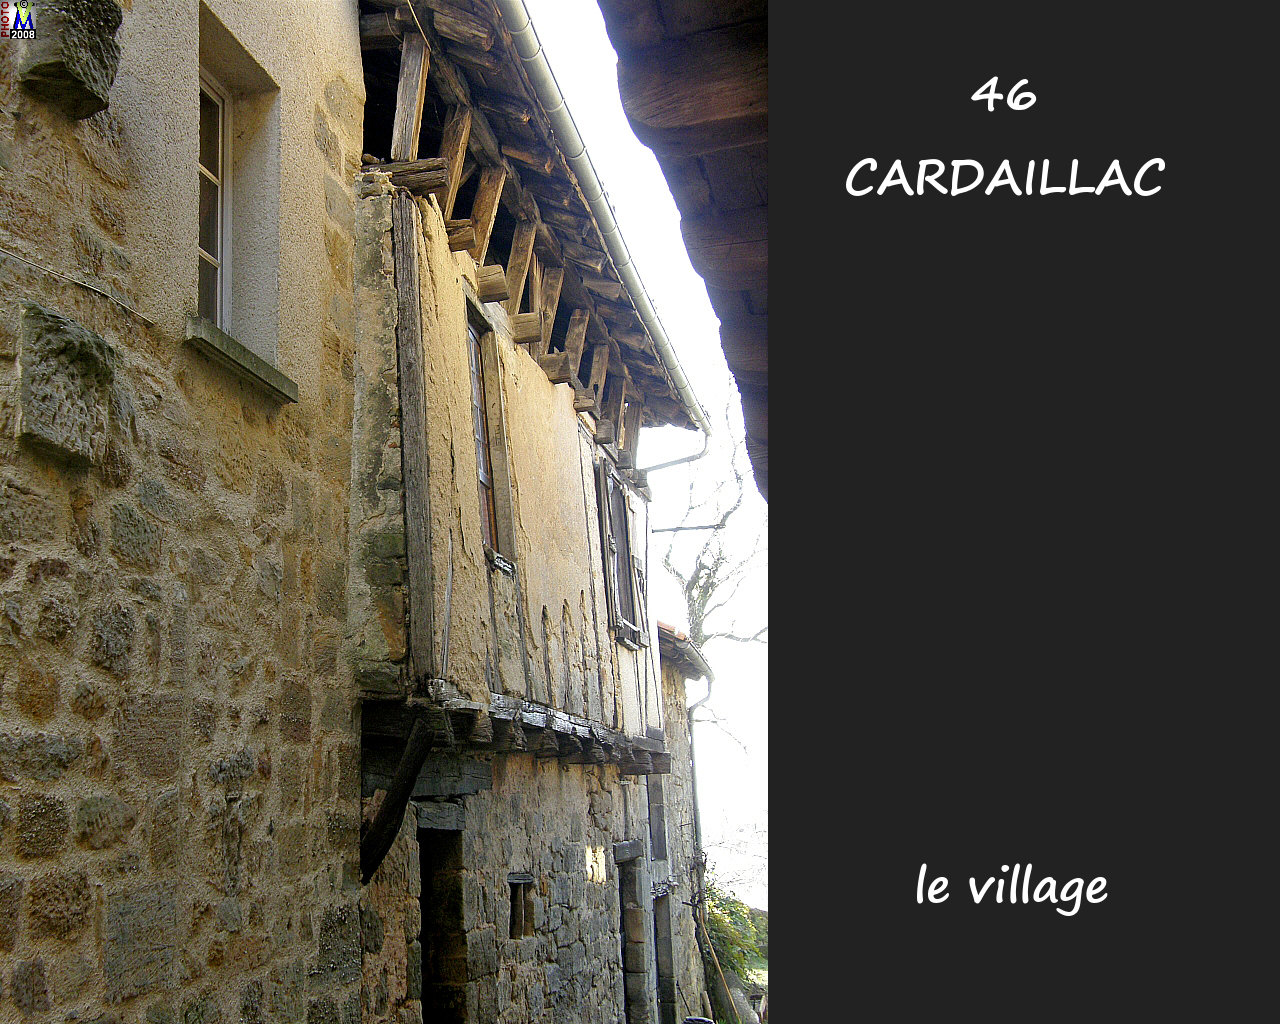 46CARDAILLAC_village_214.jpg